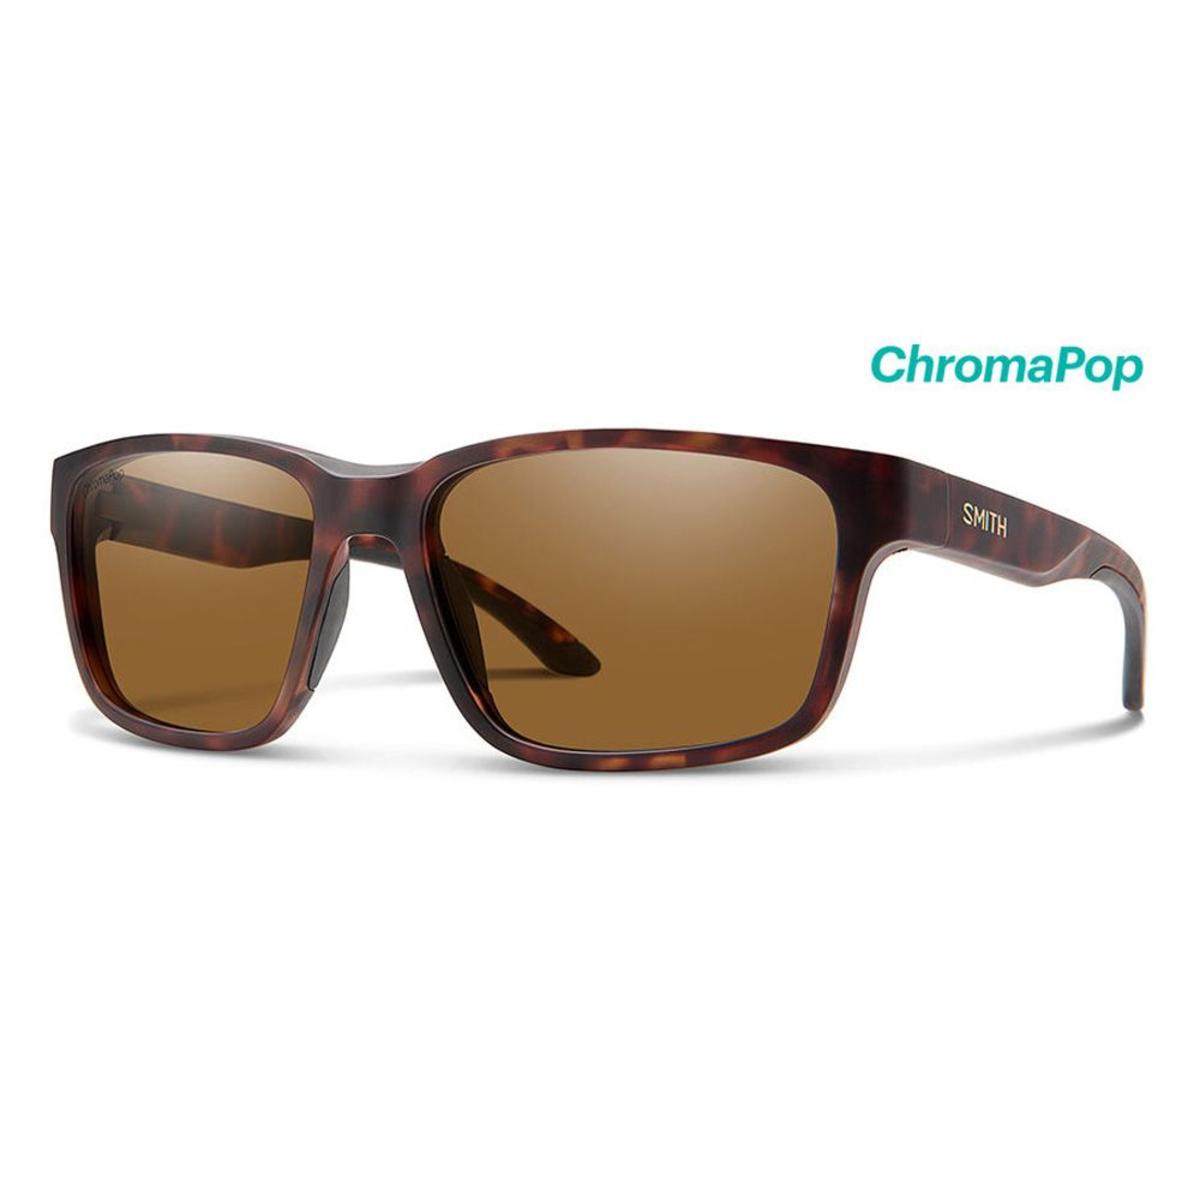 Smith Optics Basecamp Sunglasses Chromapop Polarized Brown - Matte Tort Frame